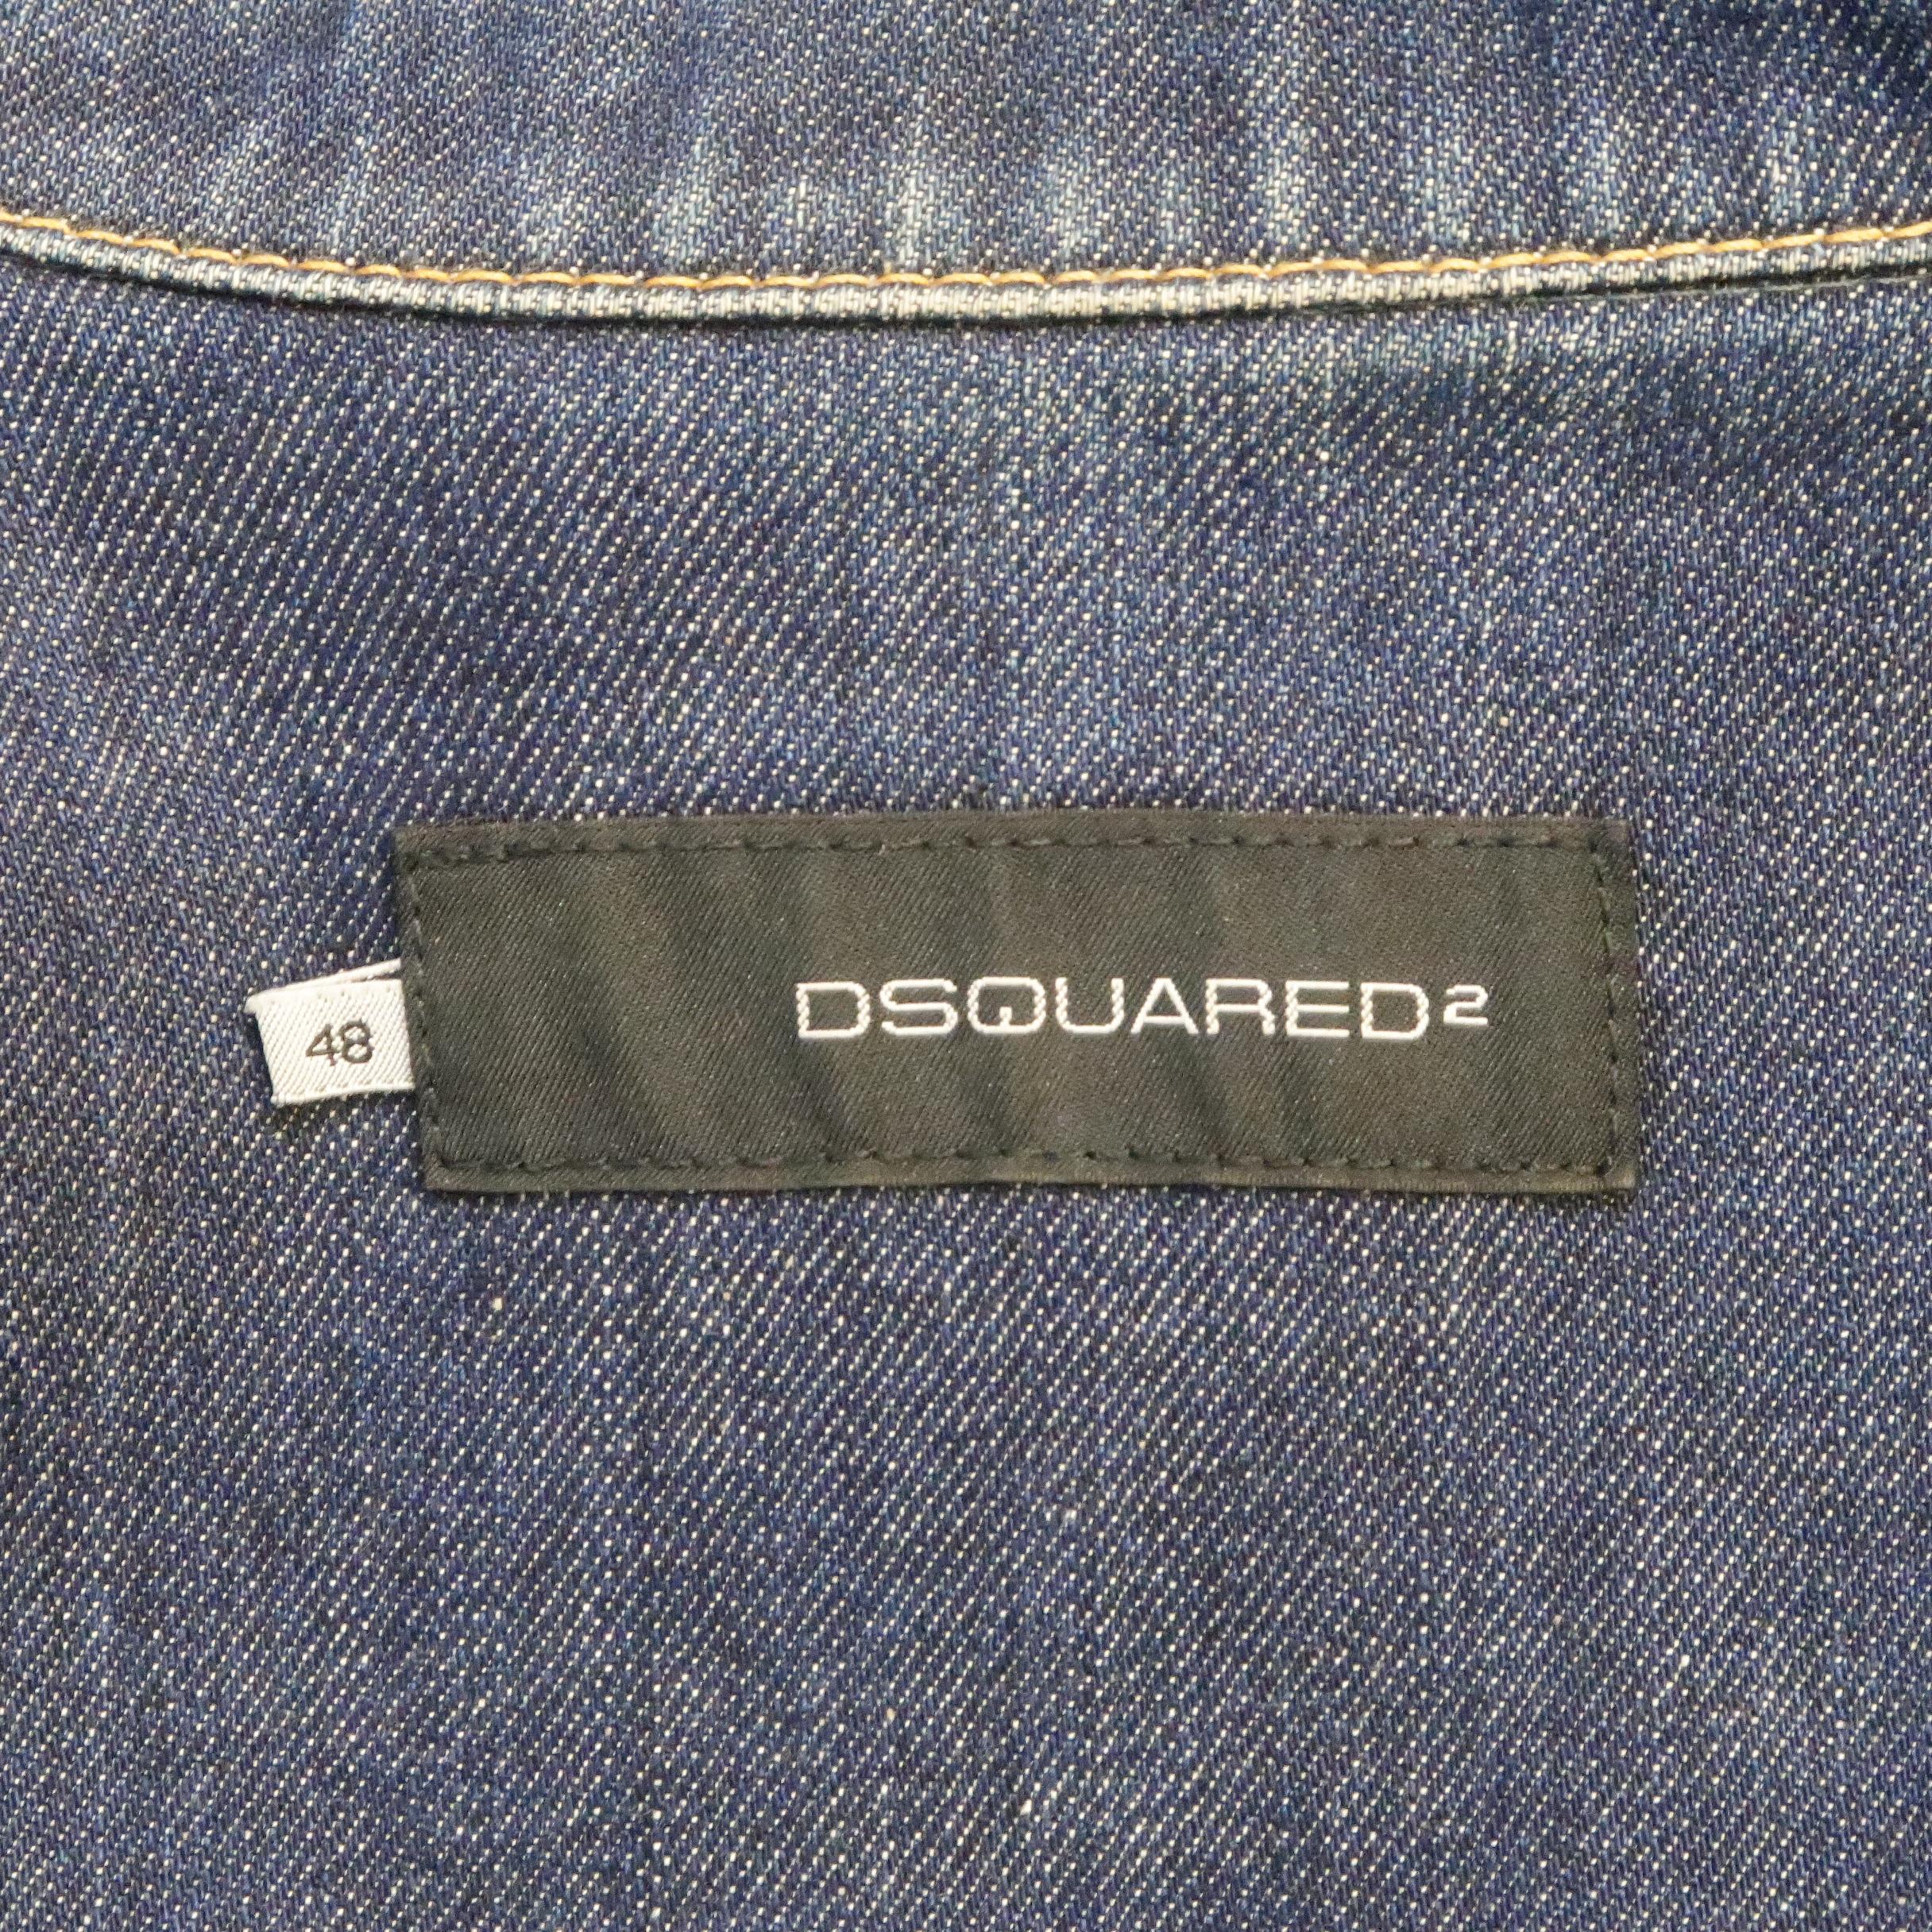 DSQUARED2 38 Indigo Denim Cropped Jean Jacket 5